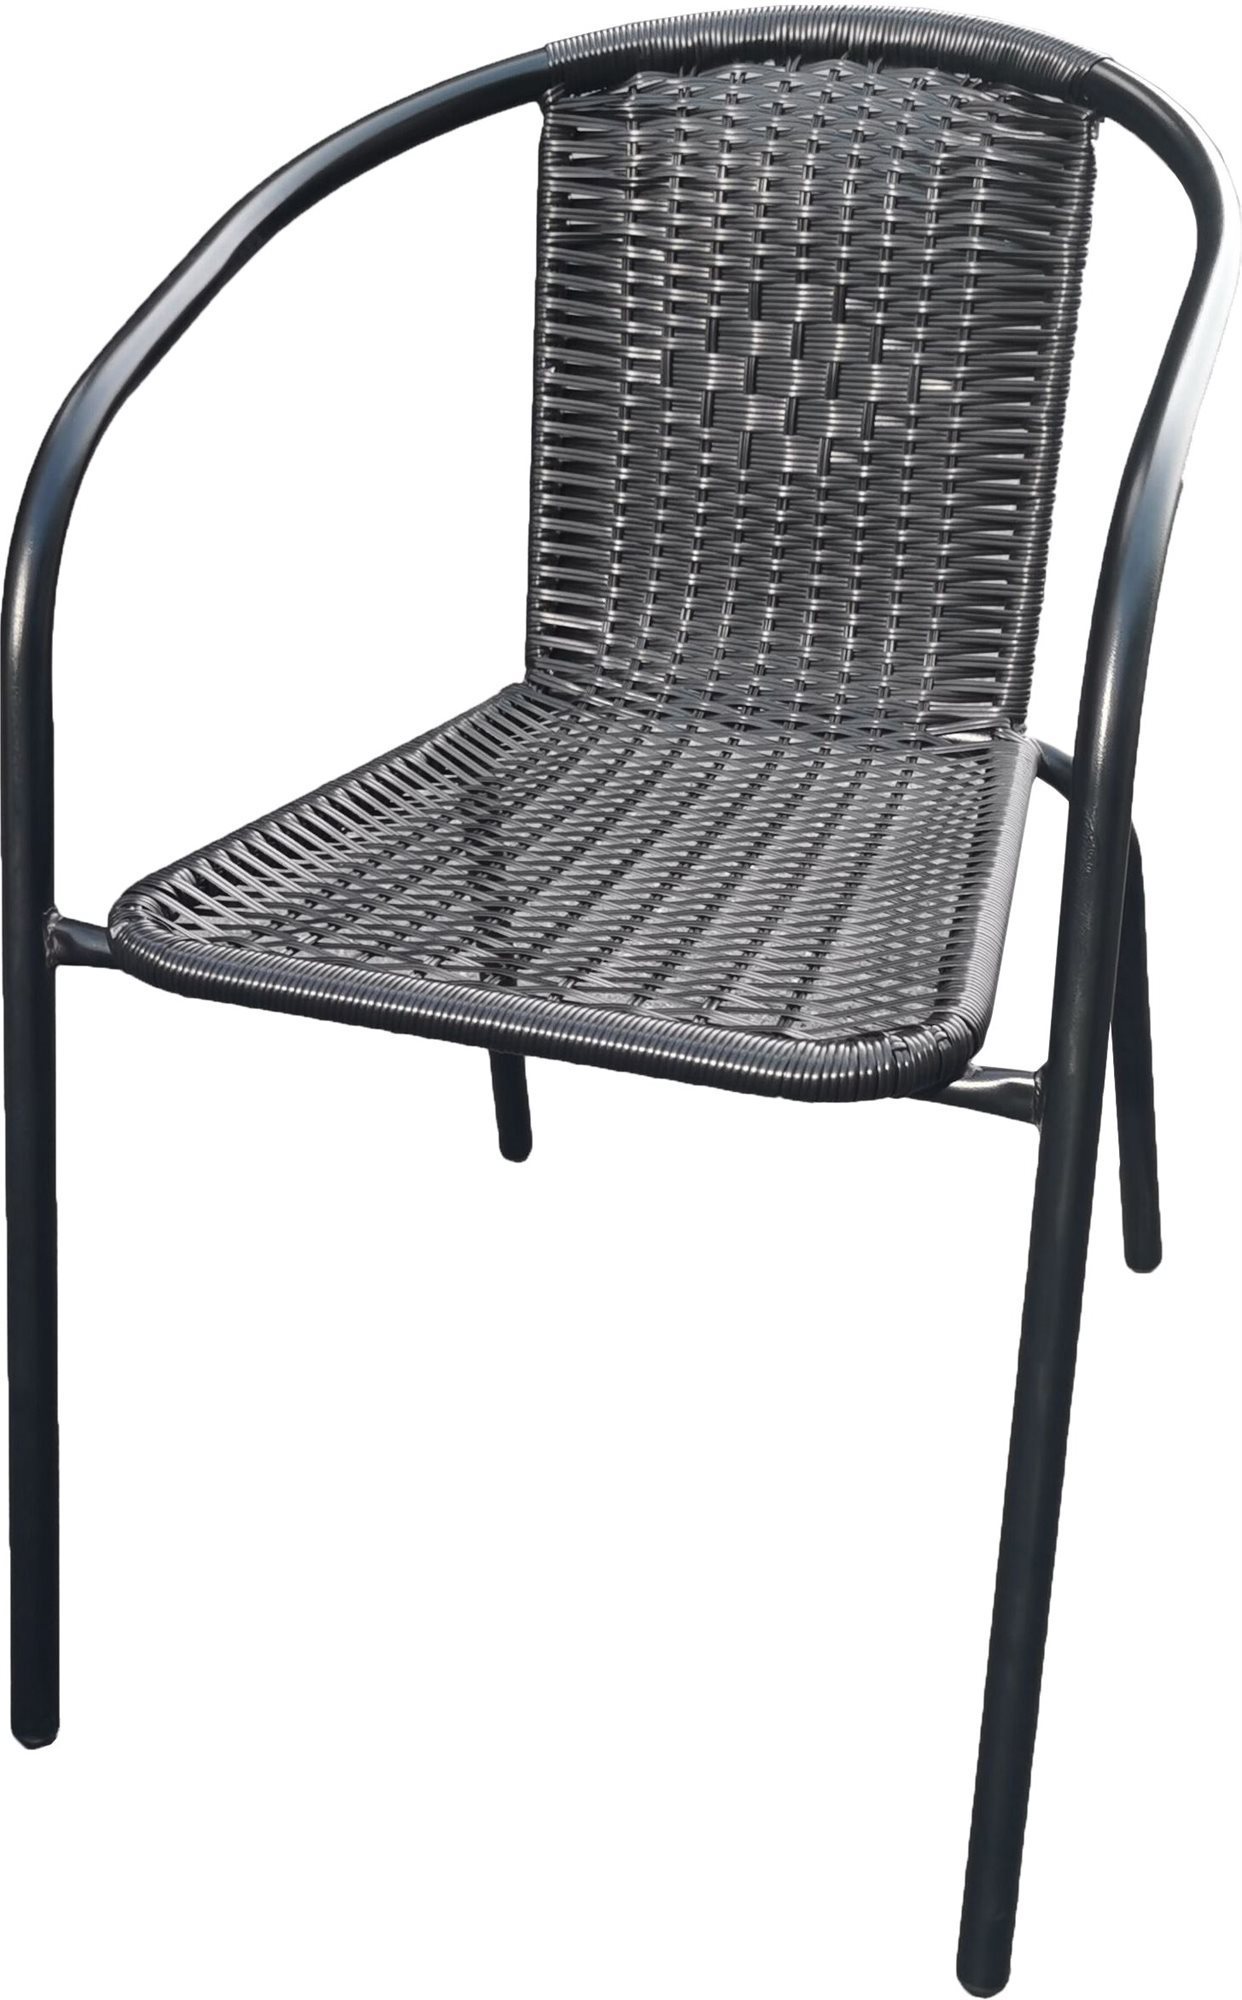 La Proromance Bistro Chair R03